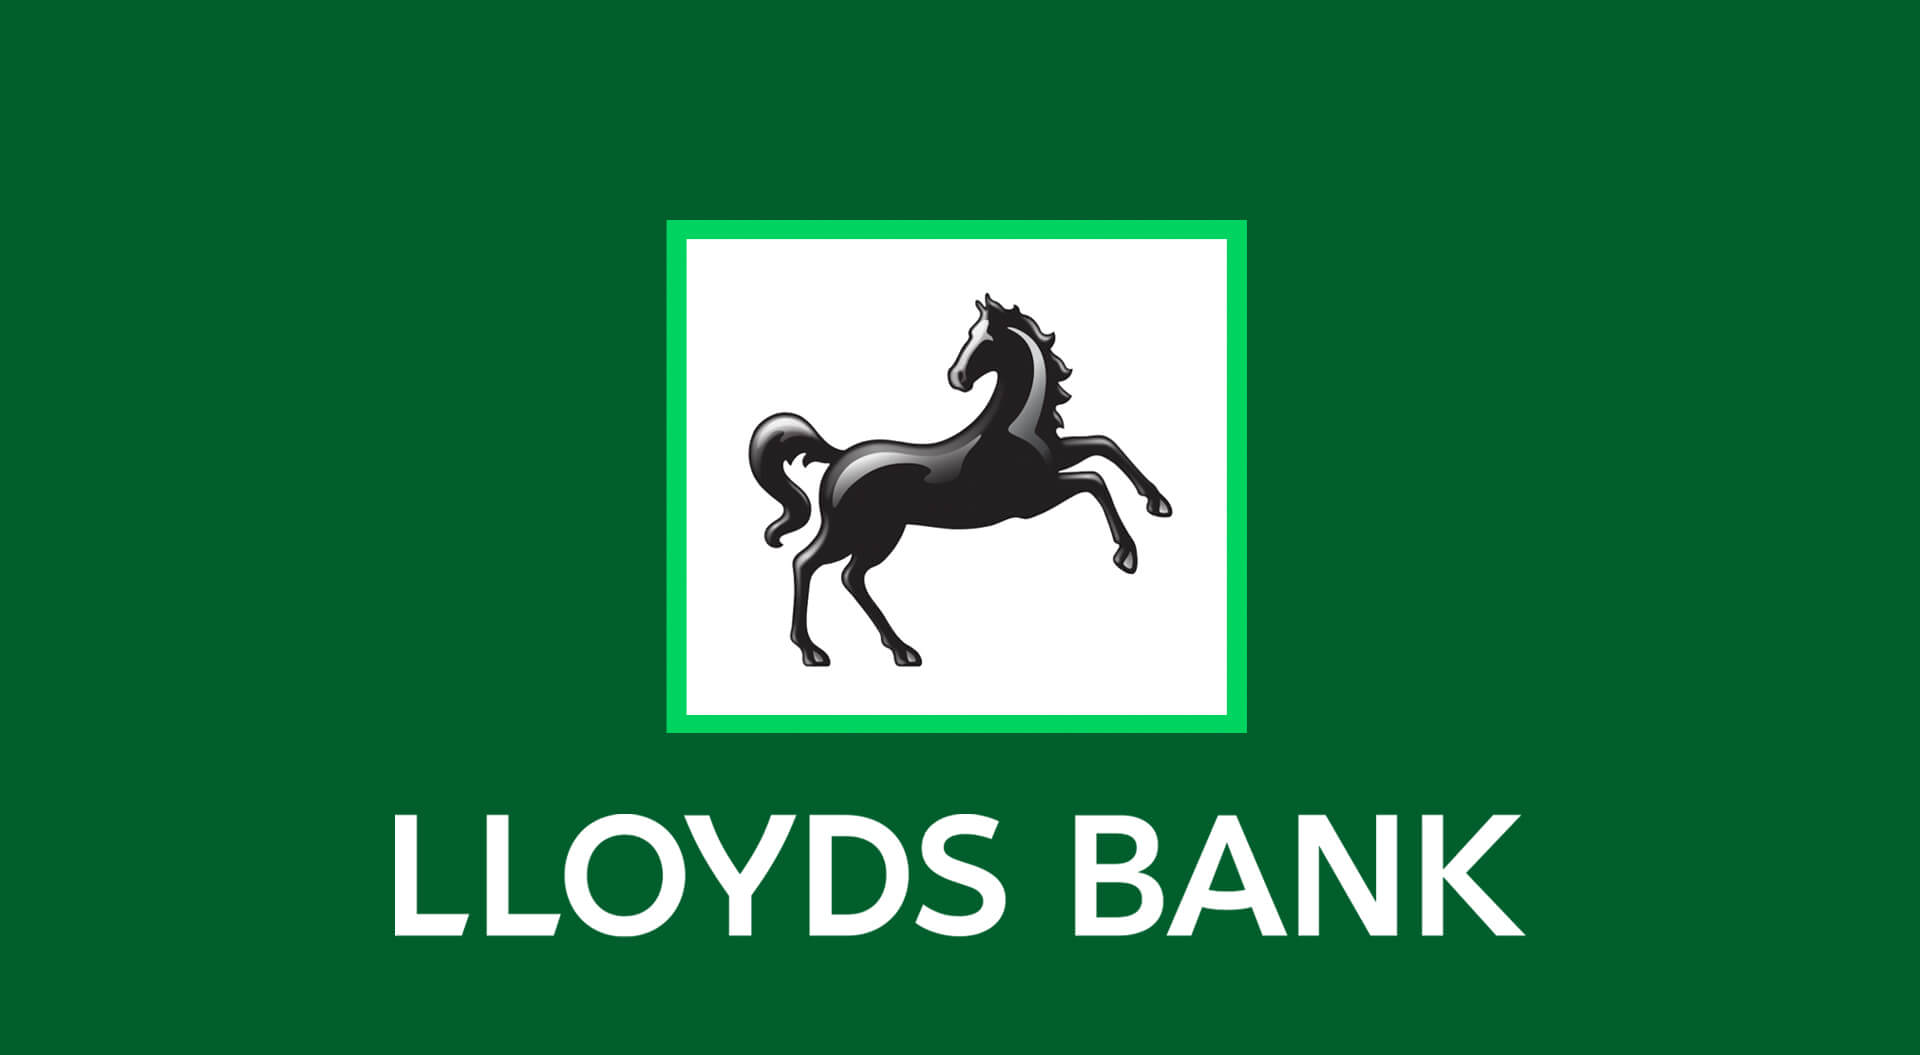 Lloyds Bank branch audit future rebrand concepts, inspiring ideas interior design 